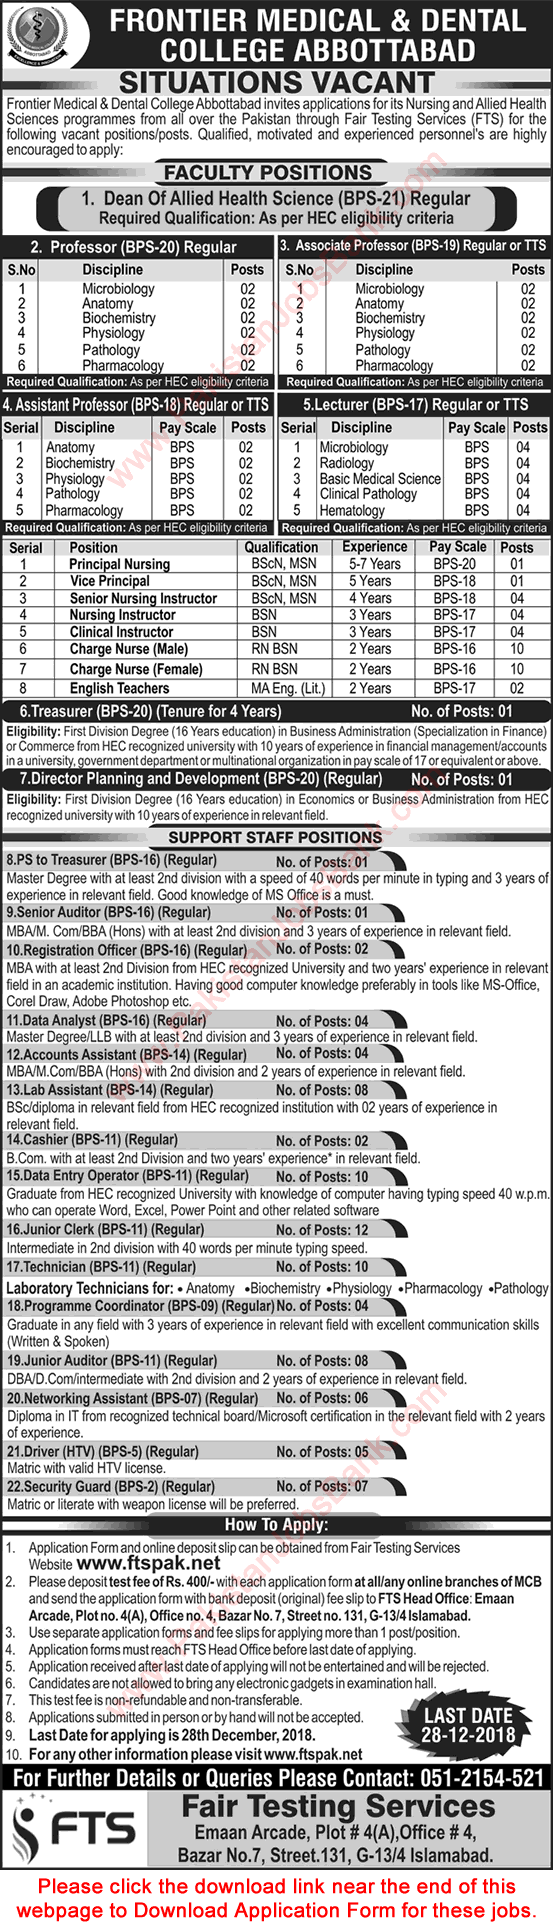 Frontier Medical and Dental College Abbottabad Jobs December 2018 FTS Application Form Latest